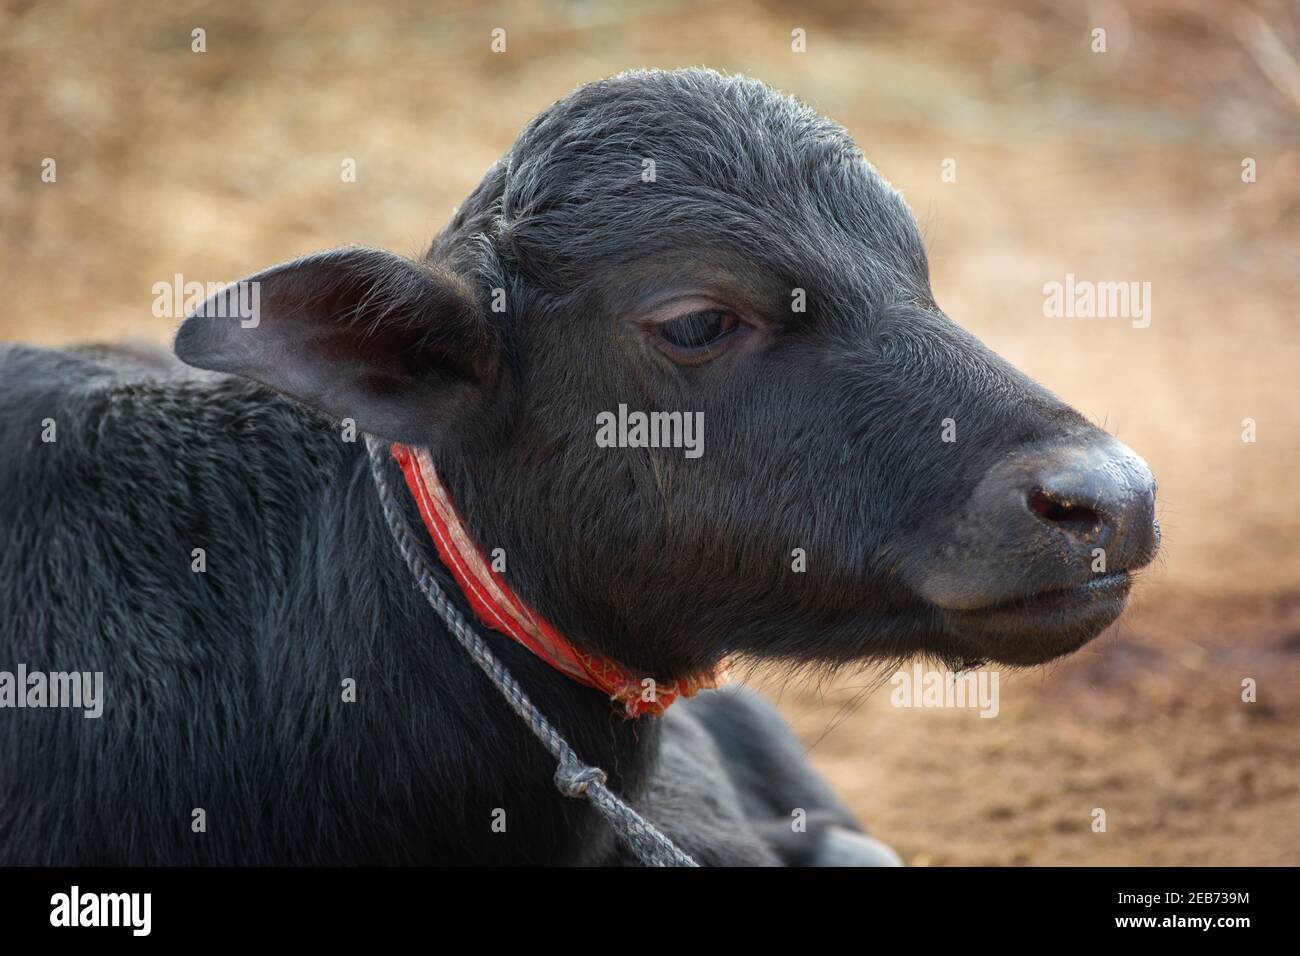 Baby buffalo in rural village Stock Photo